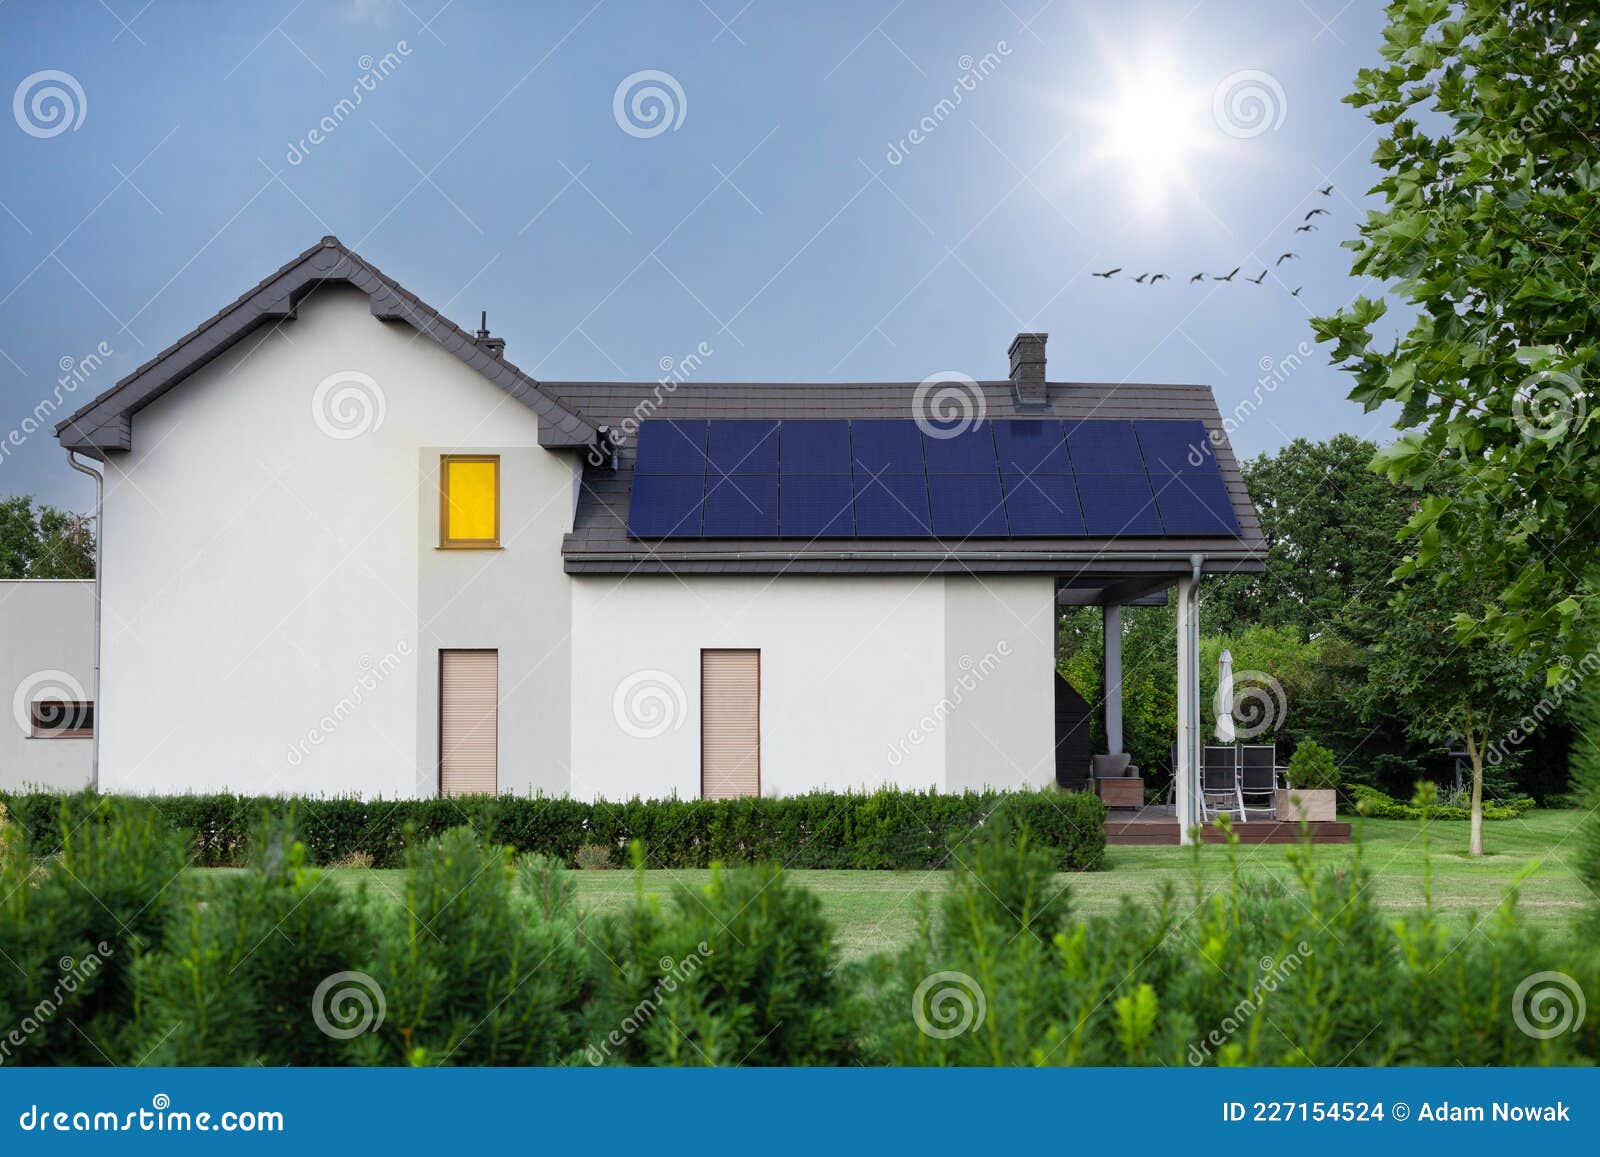 modern house and beautiful garden with solar panels. clear sky, sun